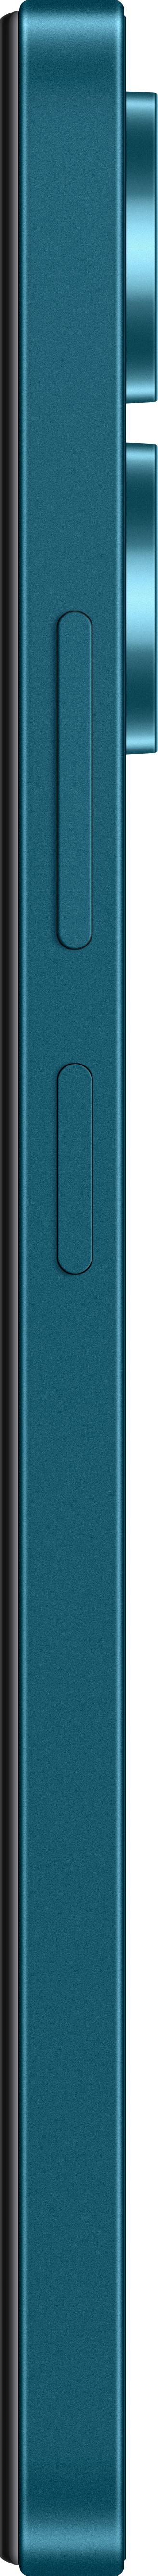 XIAOMI Redmi 13C Navy Blue 128 Dual GB SIM